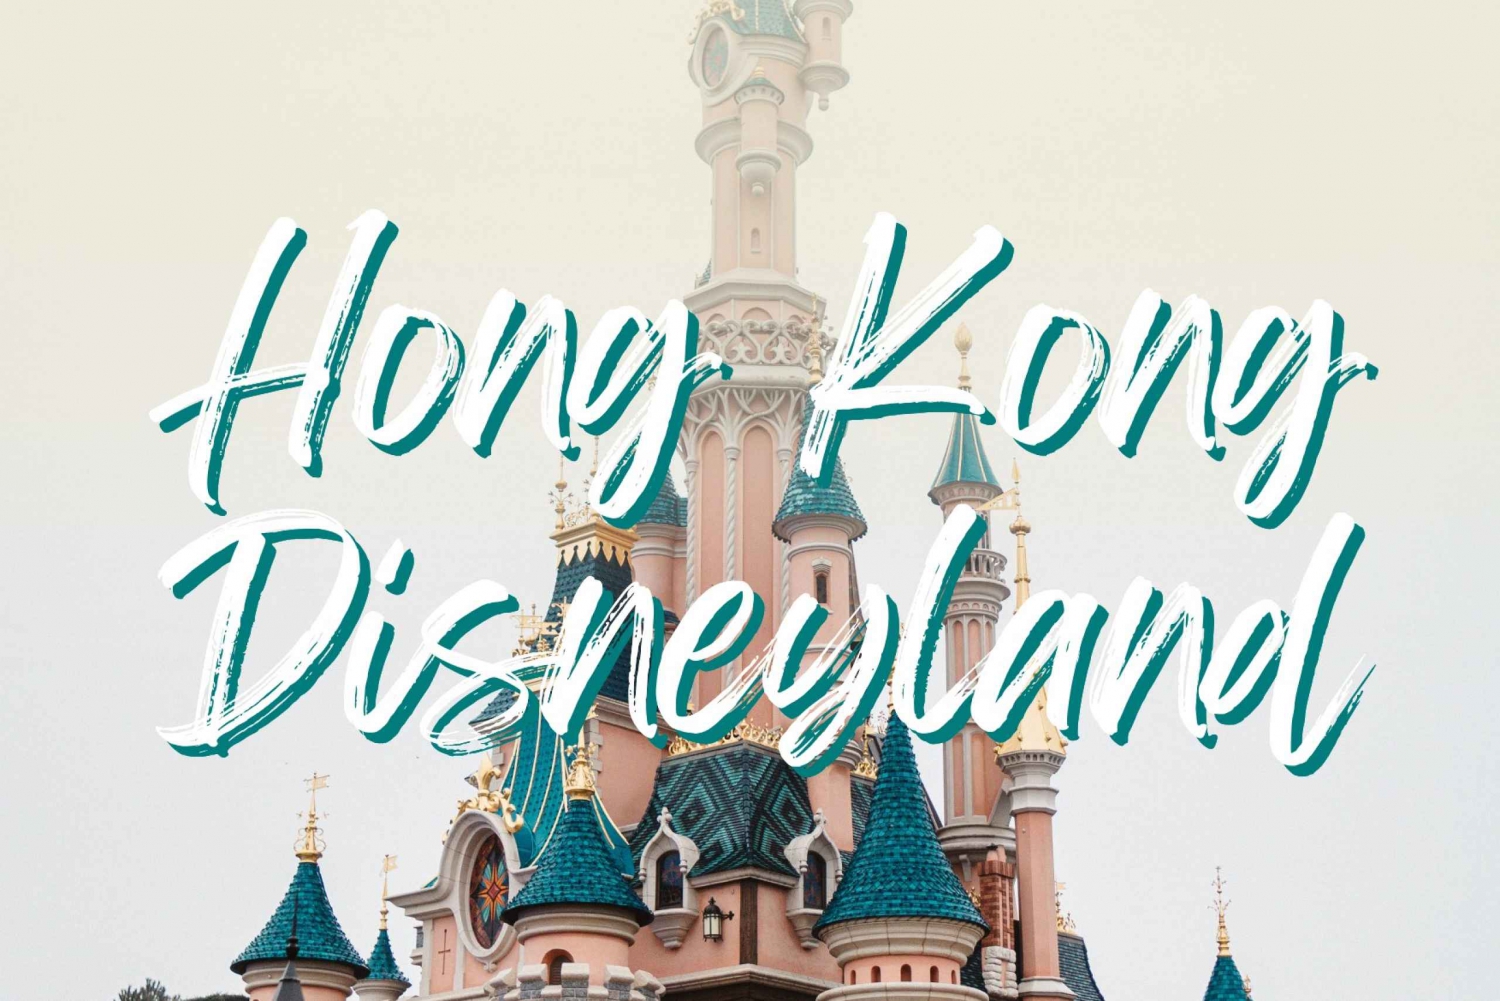 Hongkong Package 2: Disneyland with Free City Tour